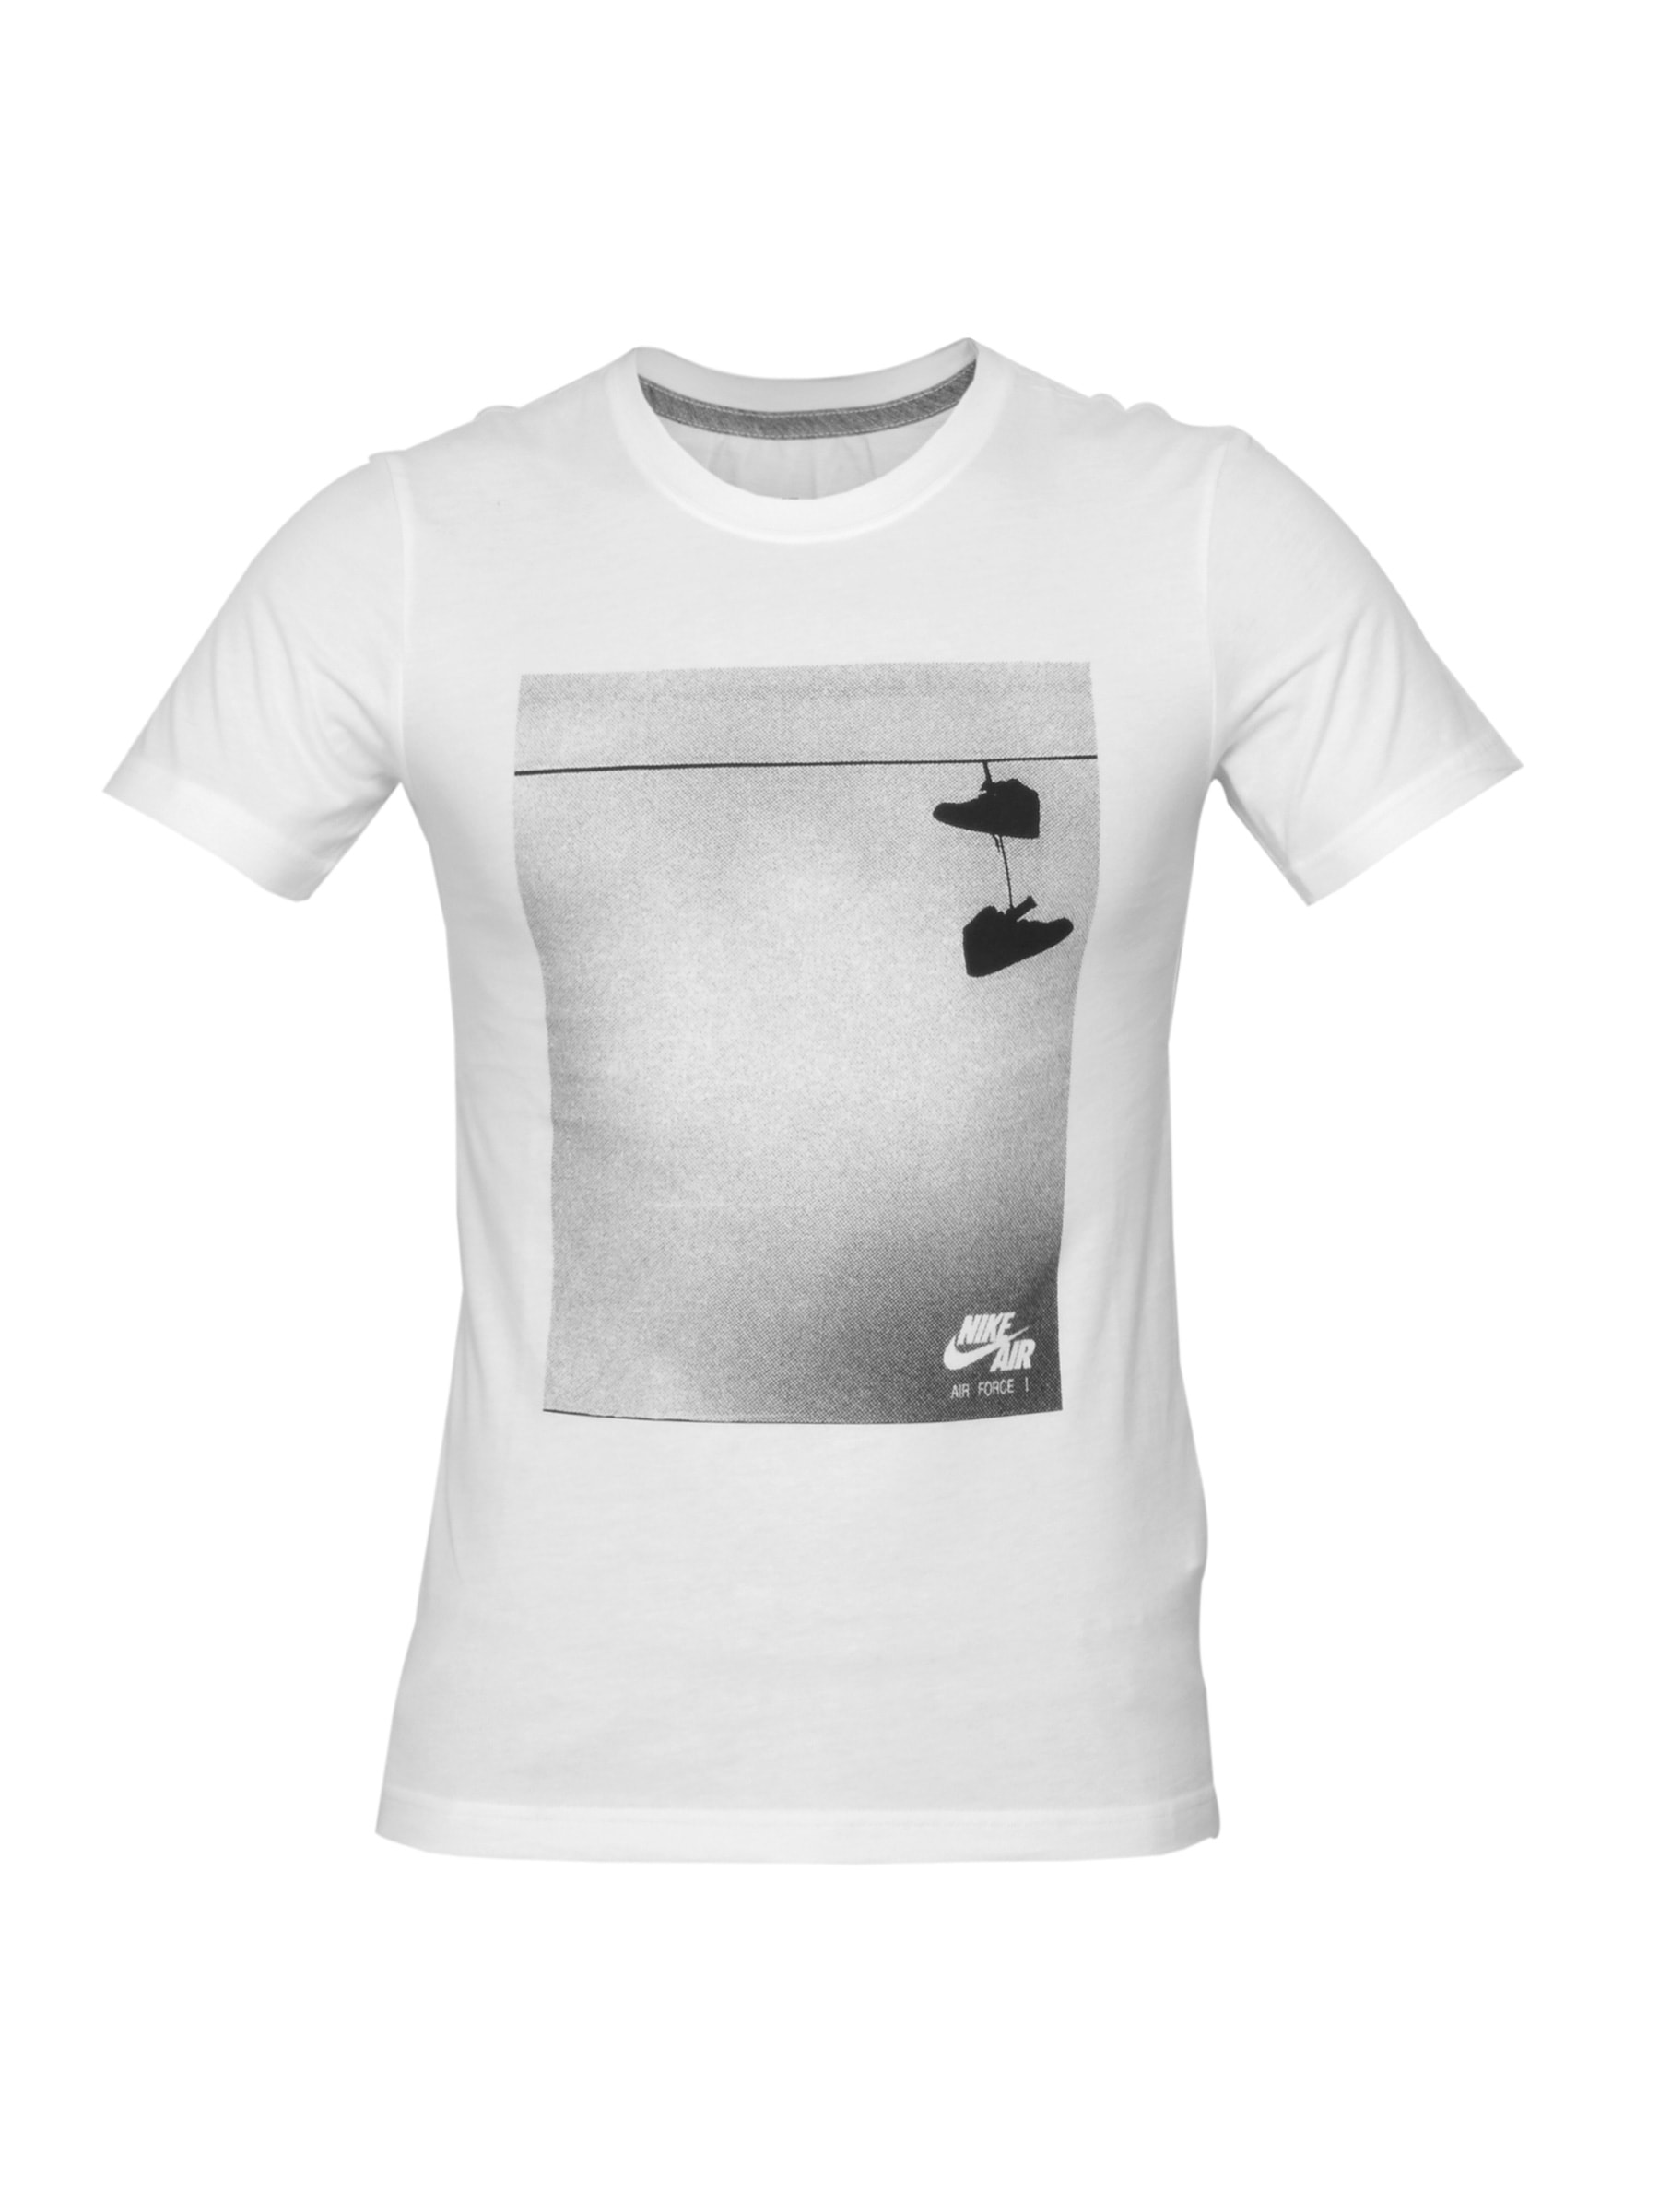 Nike Men Graphic Print White T-shirt